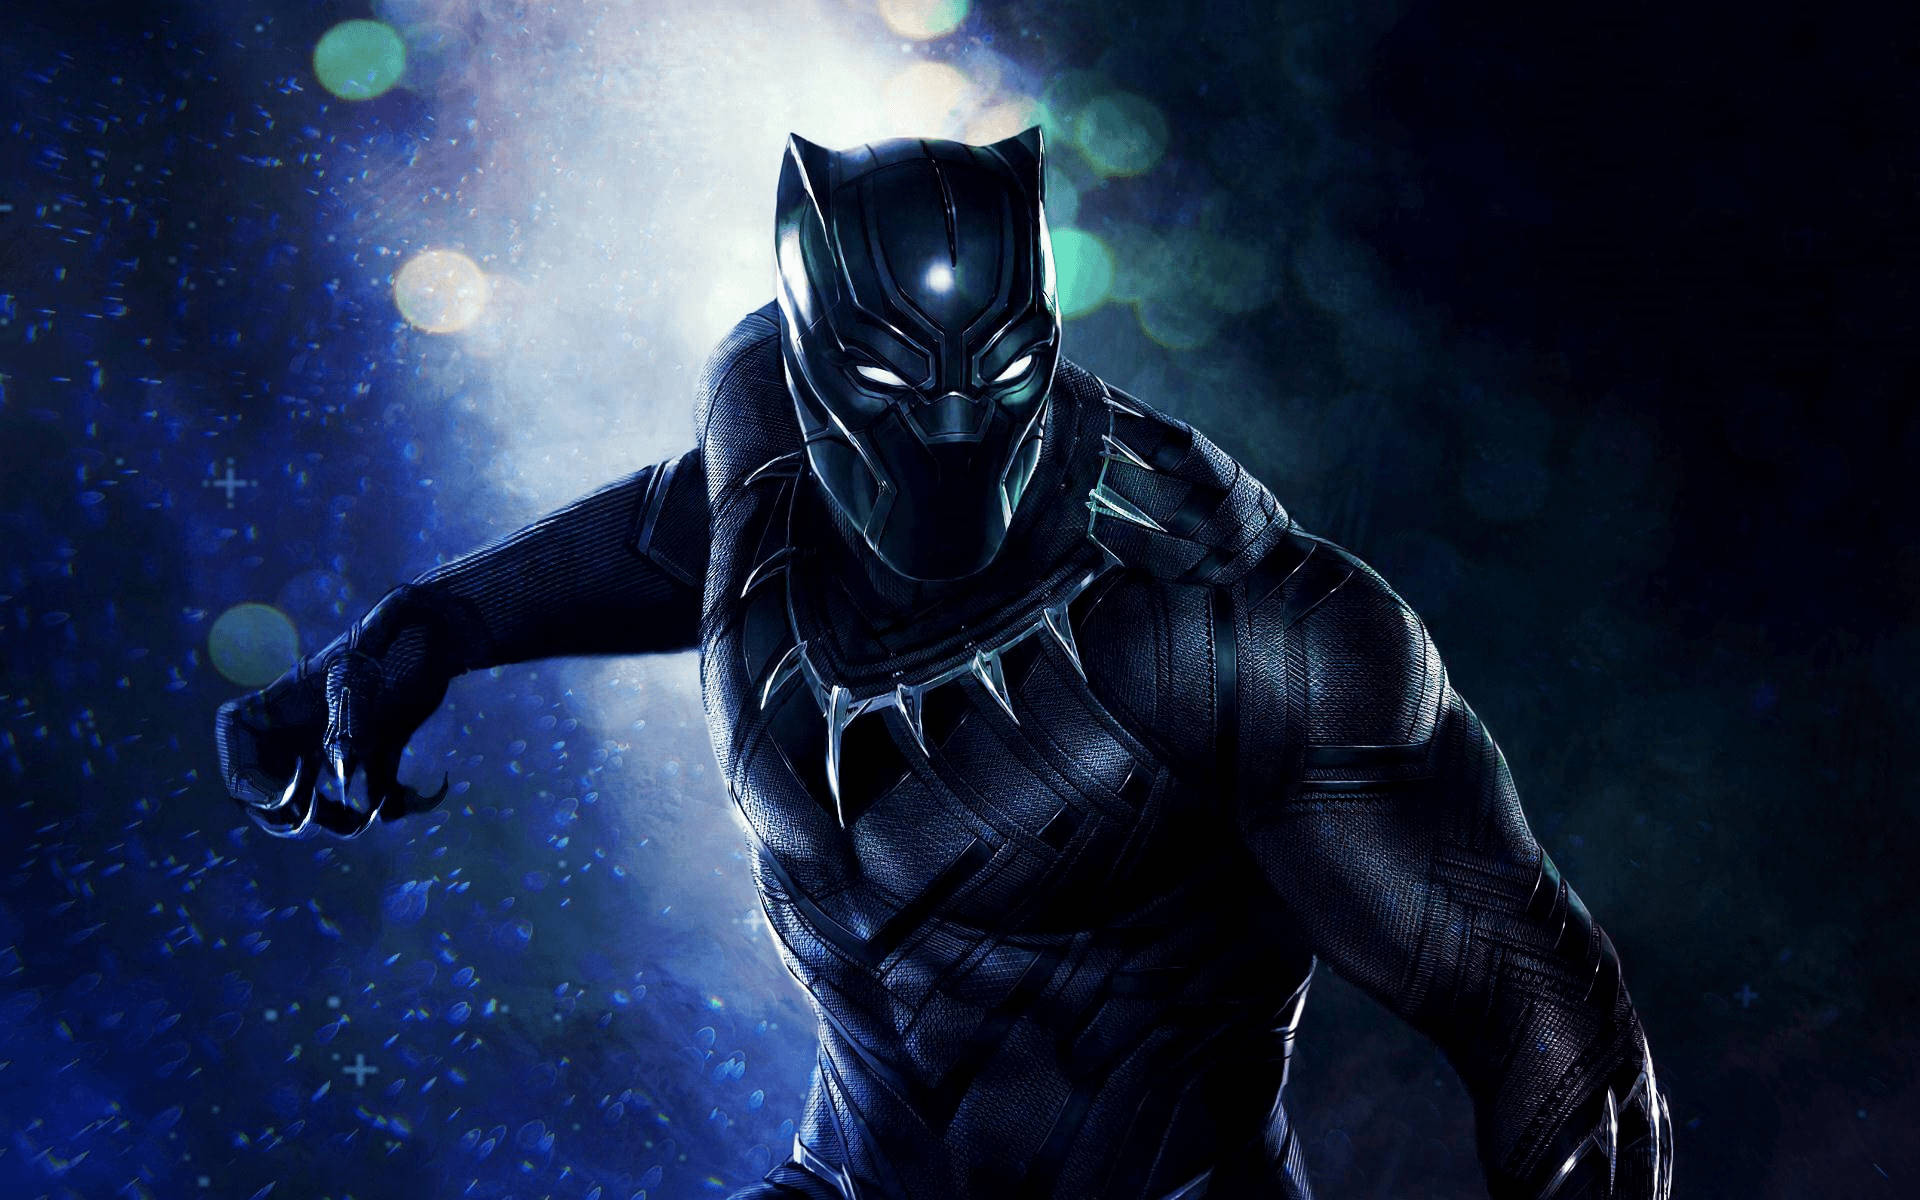 Aesthetic Black Panther Theme Wallpaper